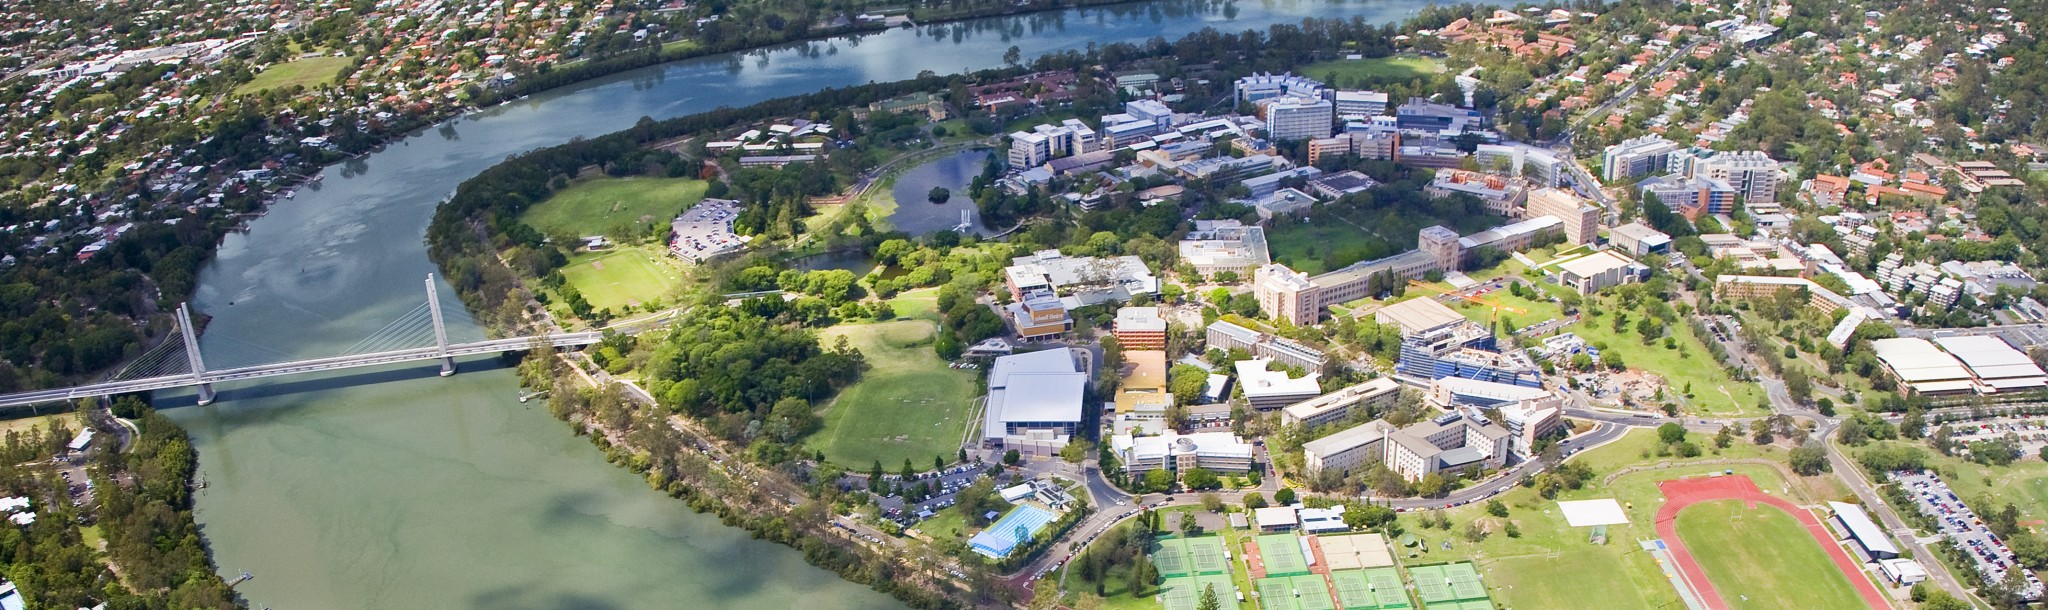 aerial-shot-of-the-uq-st-lucia-campus-1.jpg